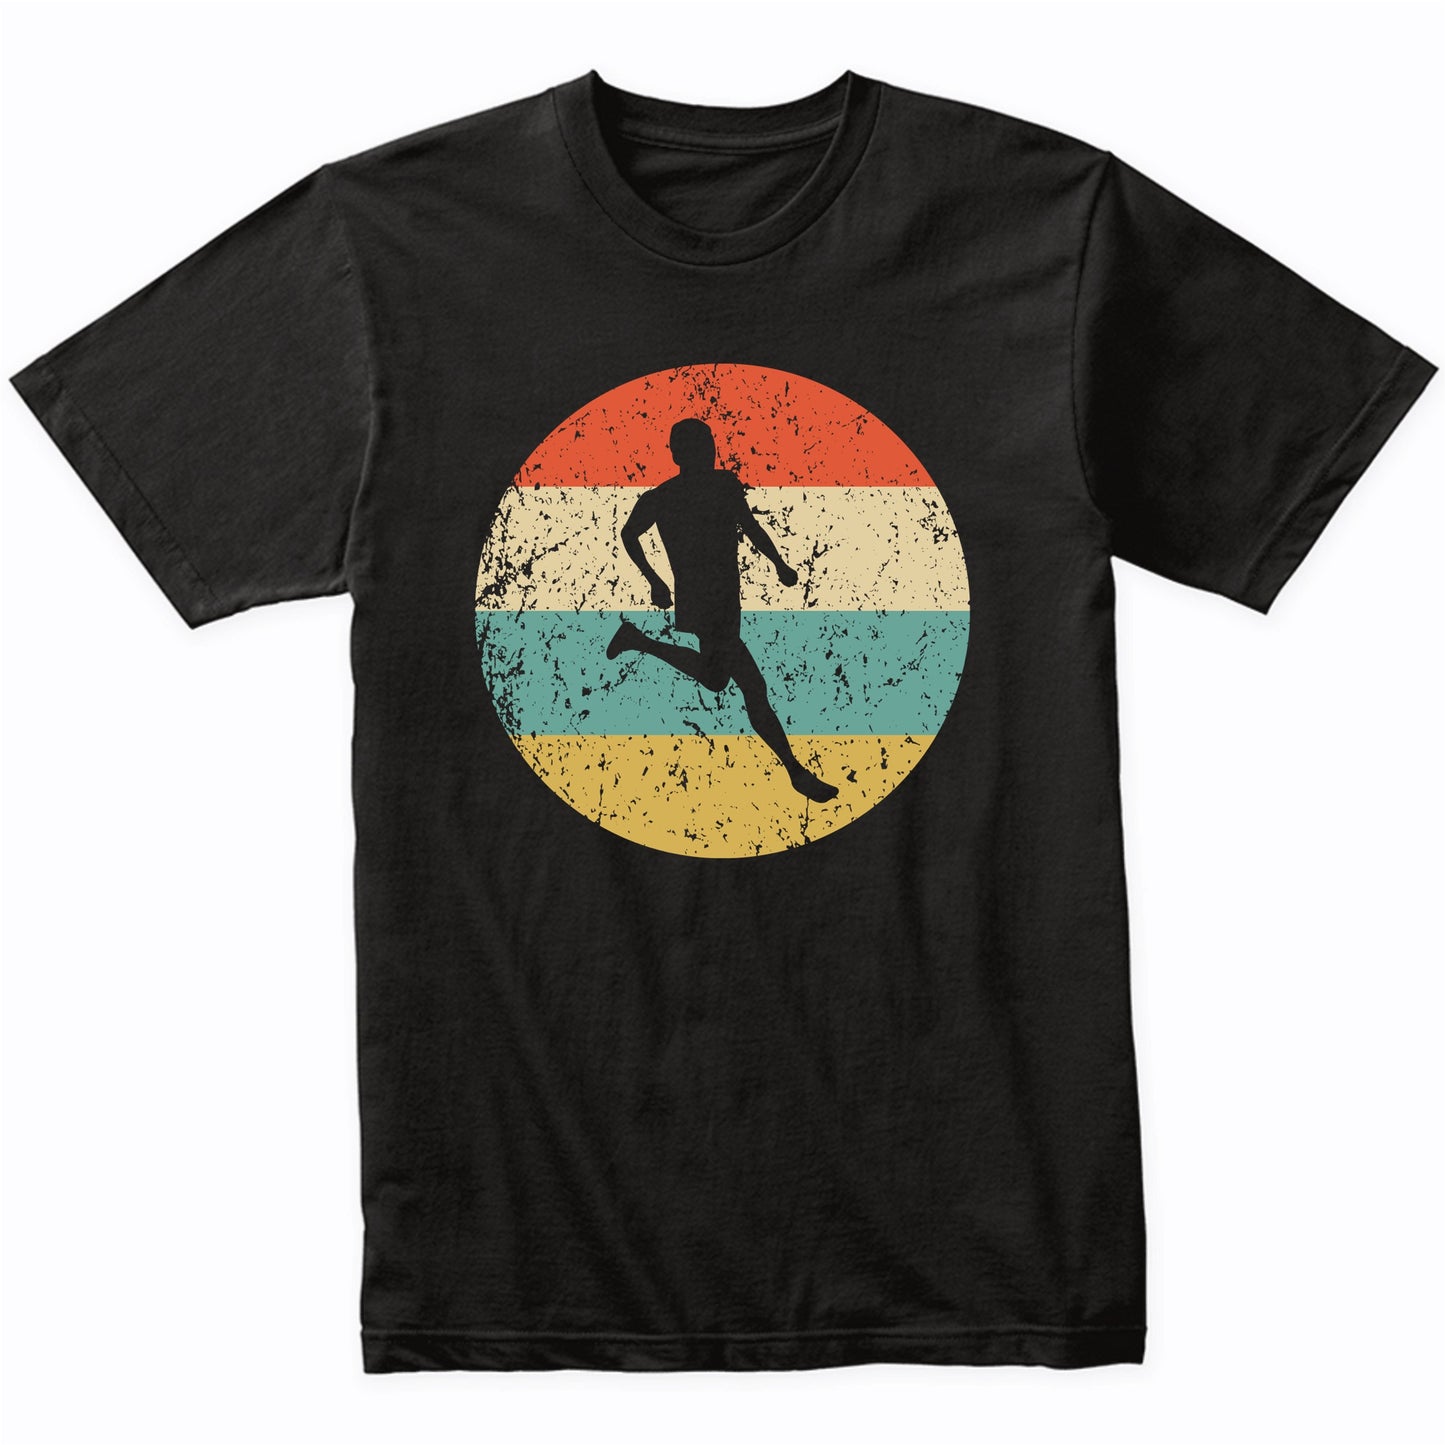 Running Shirt - Vintage Retro Runner T-Shirt